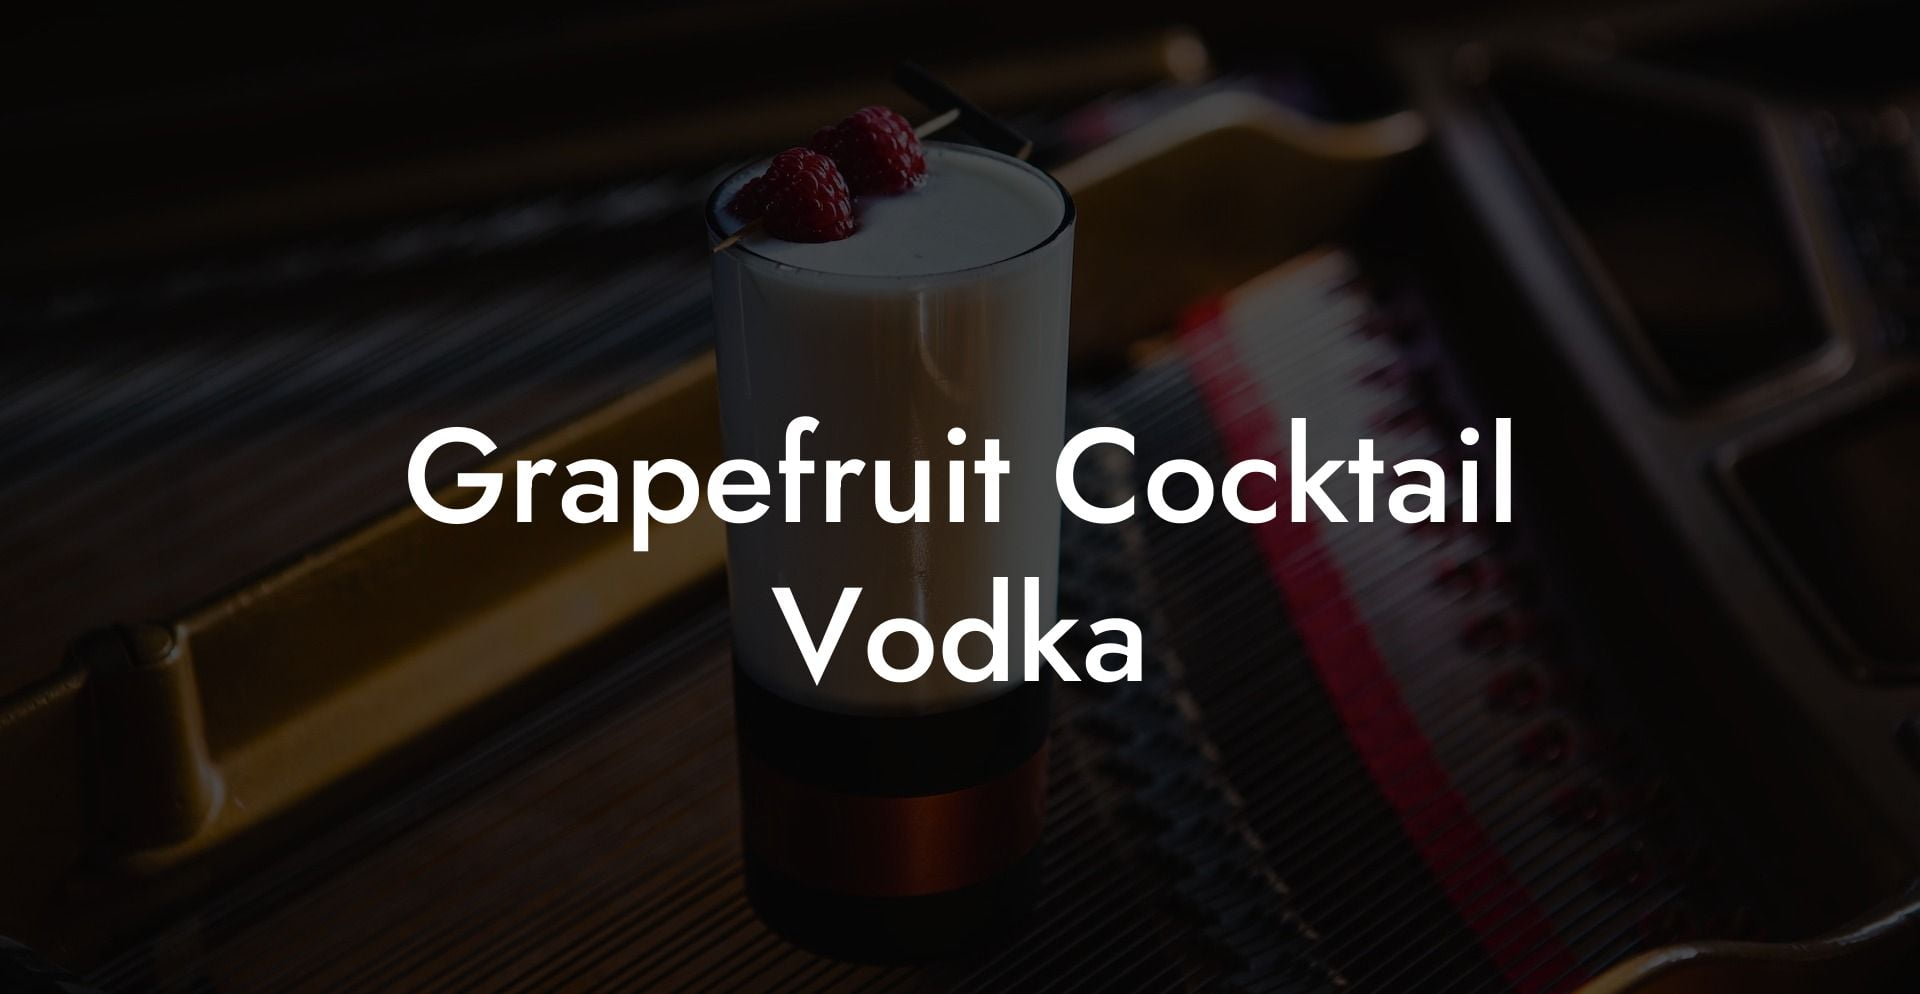 Grapefruit Cocktail Vodka